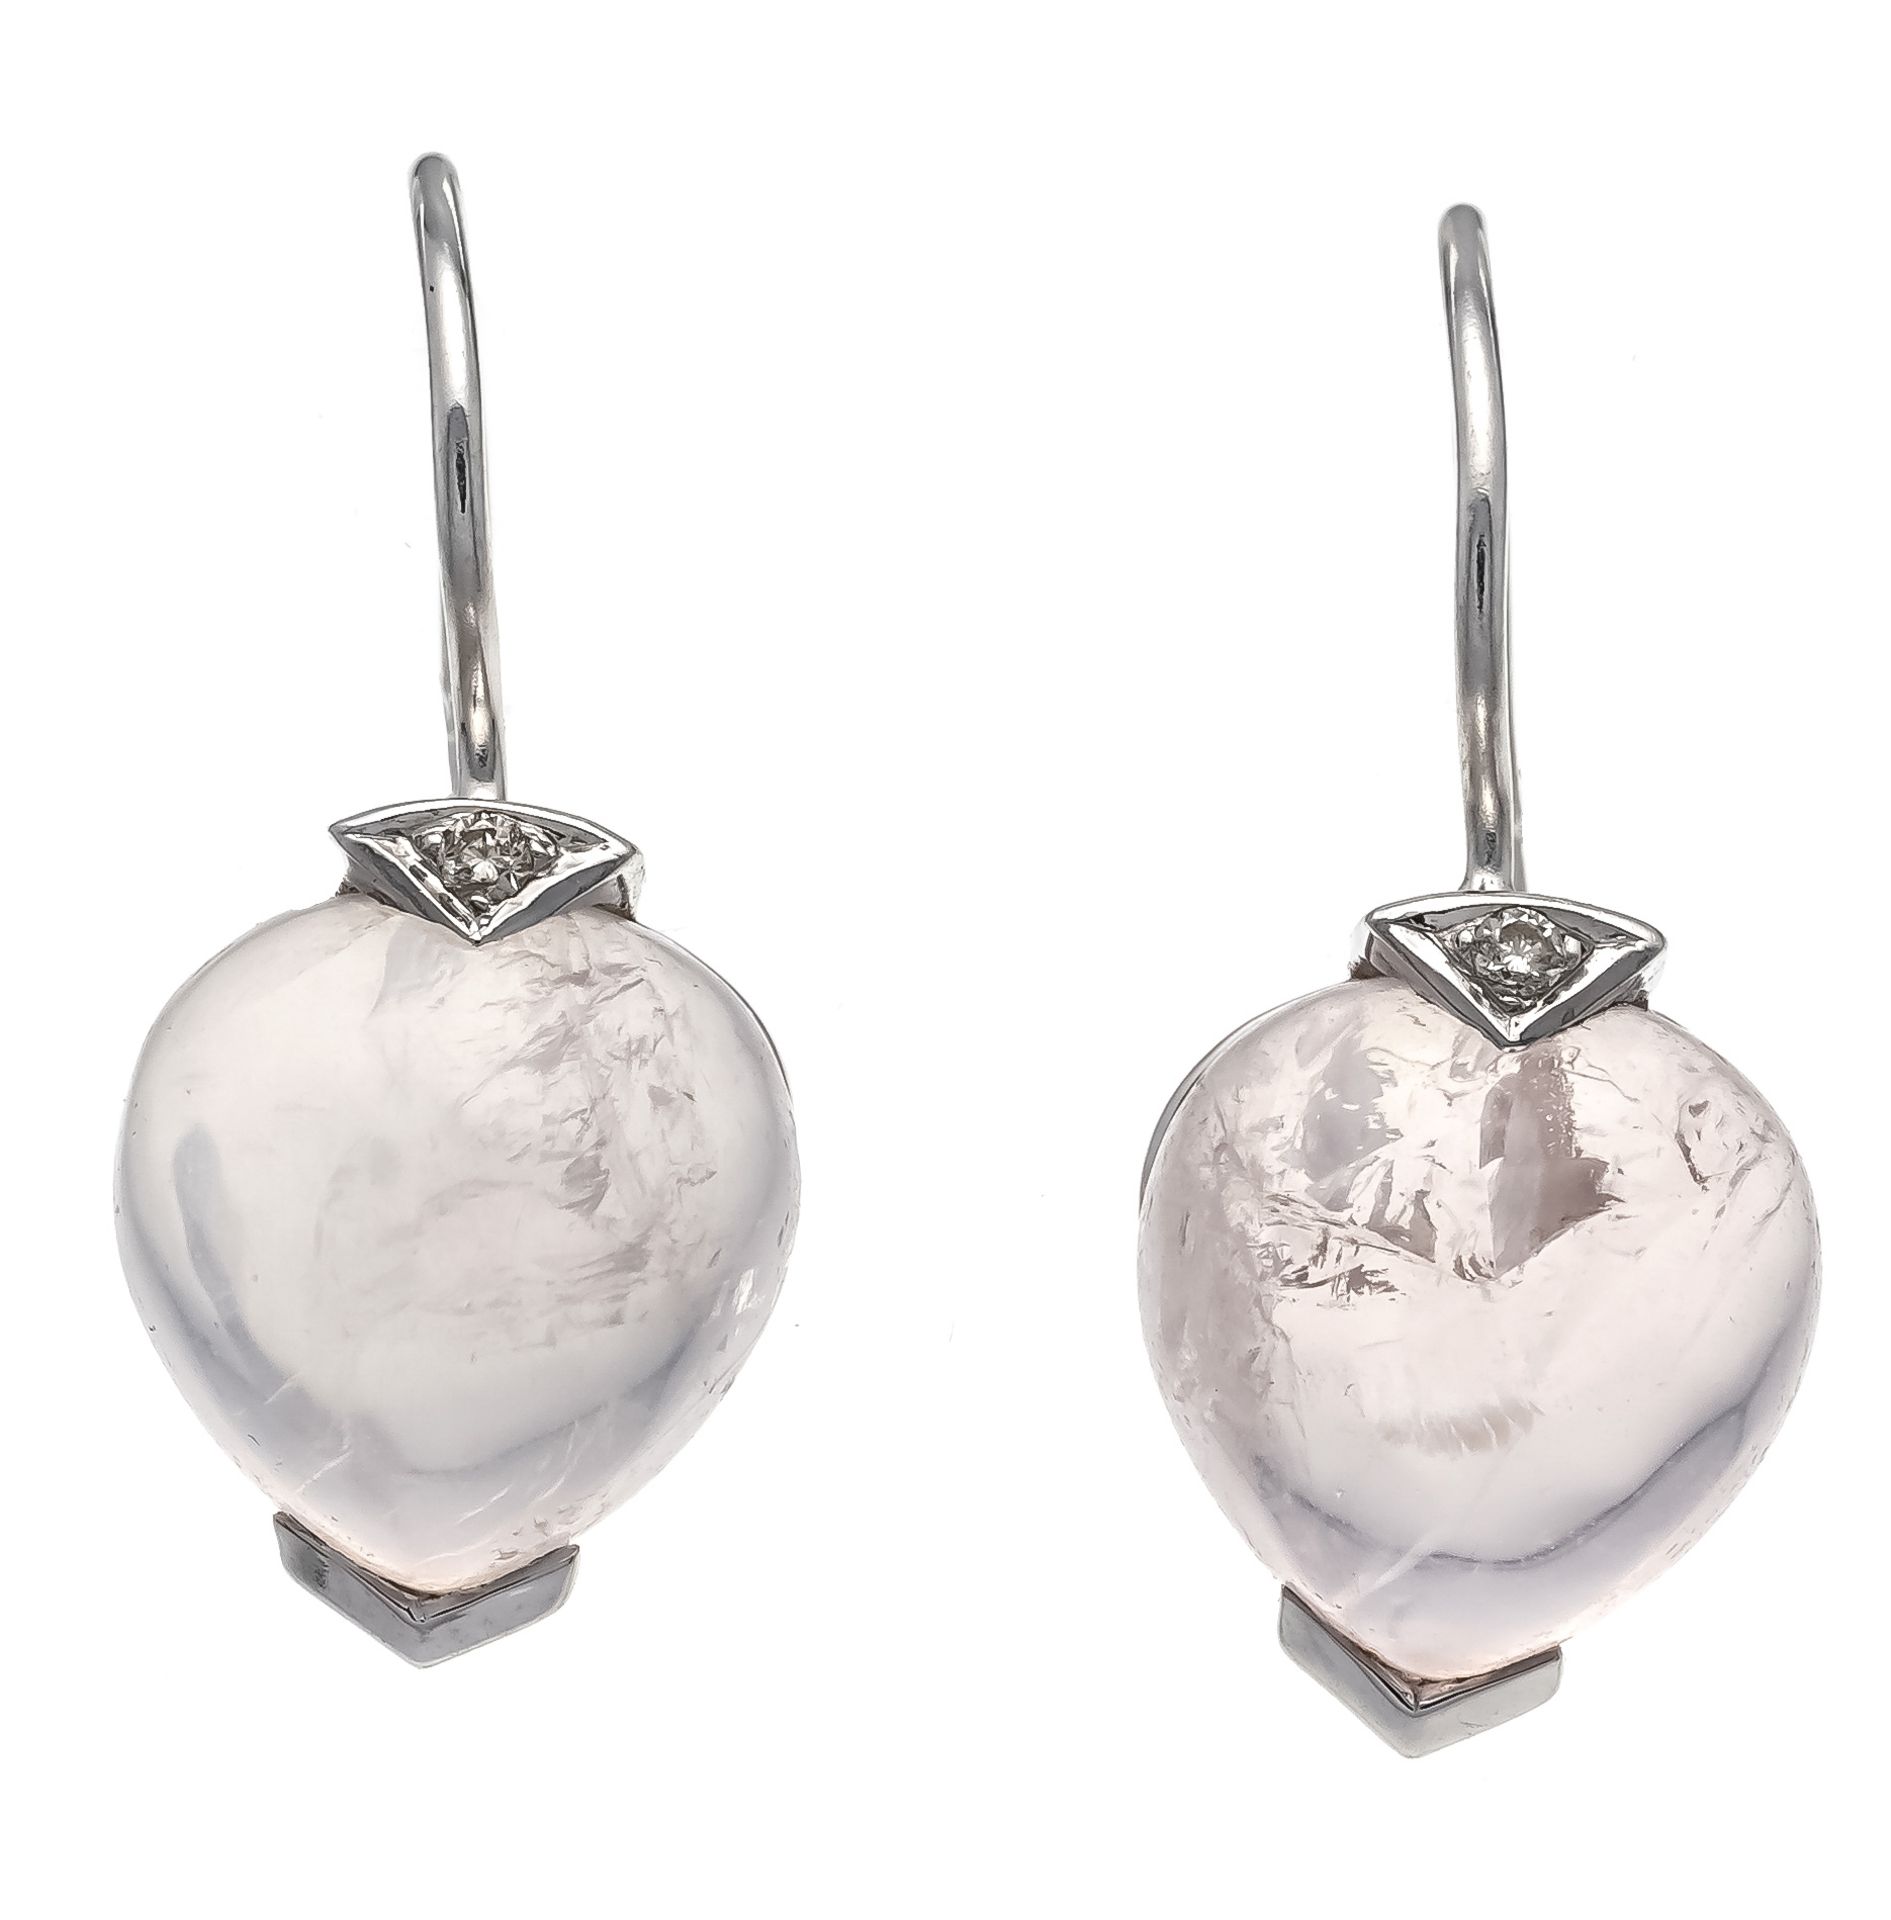 Rose quartz diamond ear pendant WG 585/000 with 2 drop-shaped rose quartz cabochons 11 x 10 mm and 2